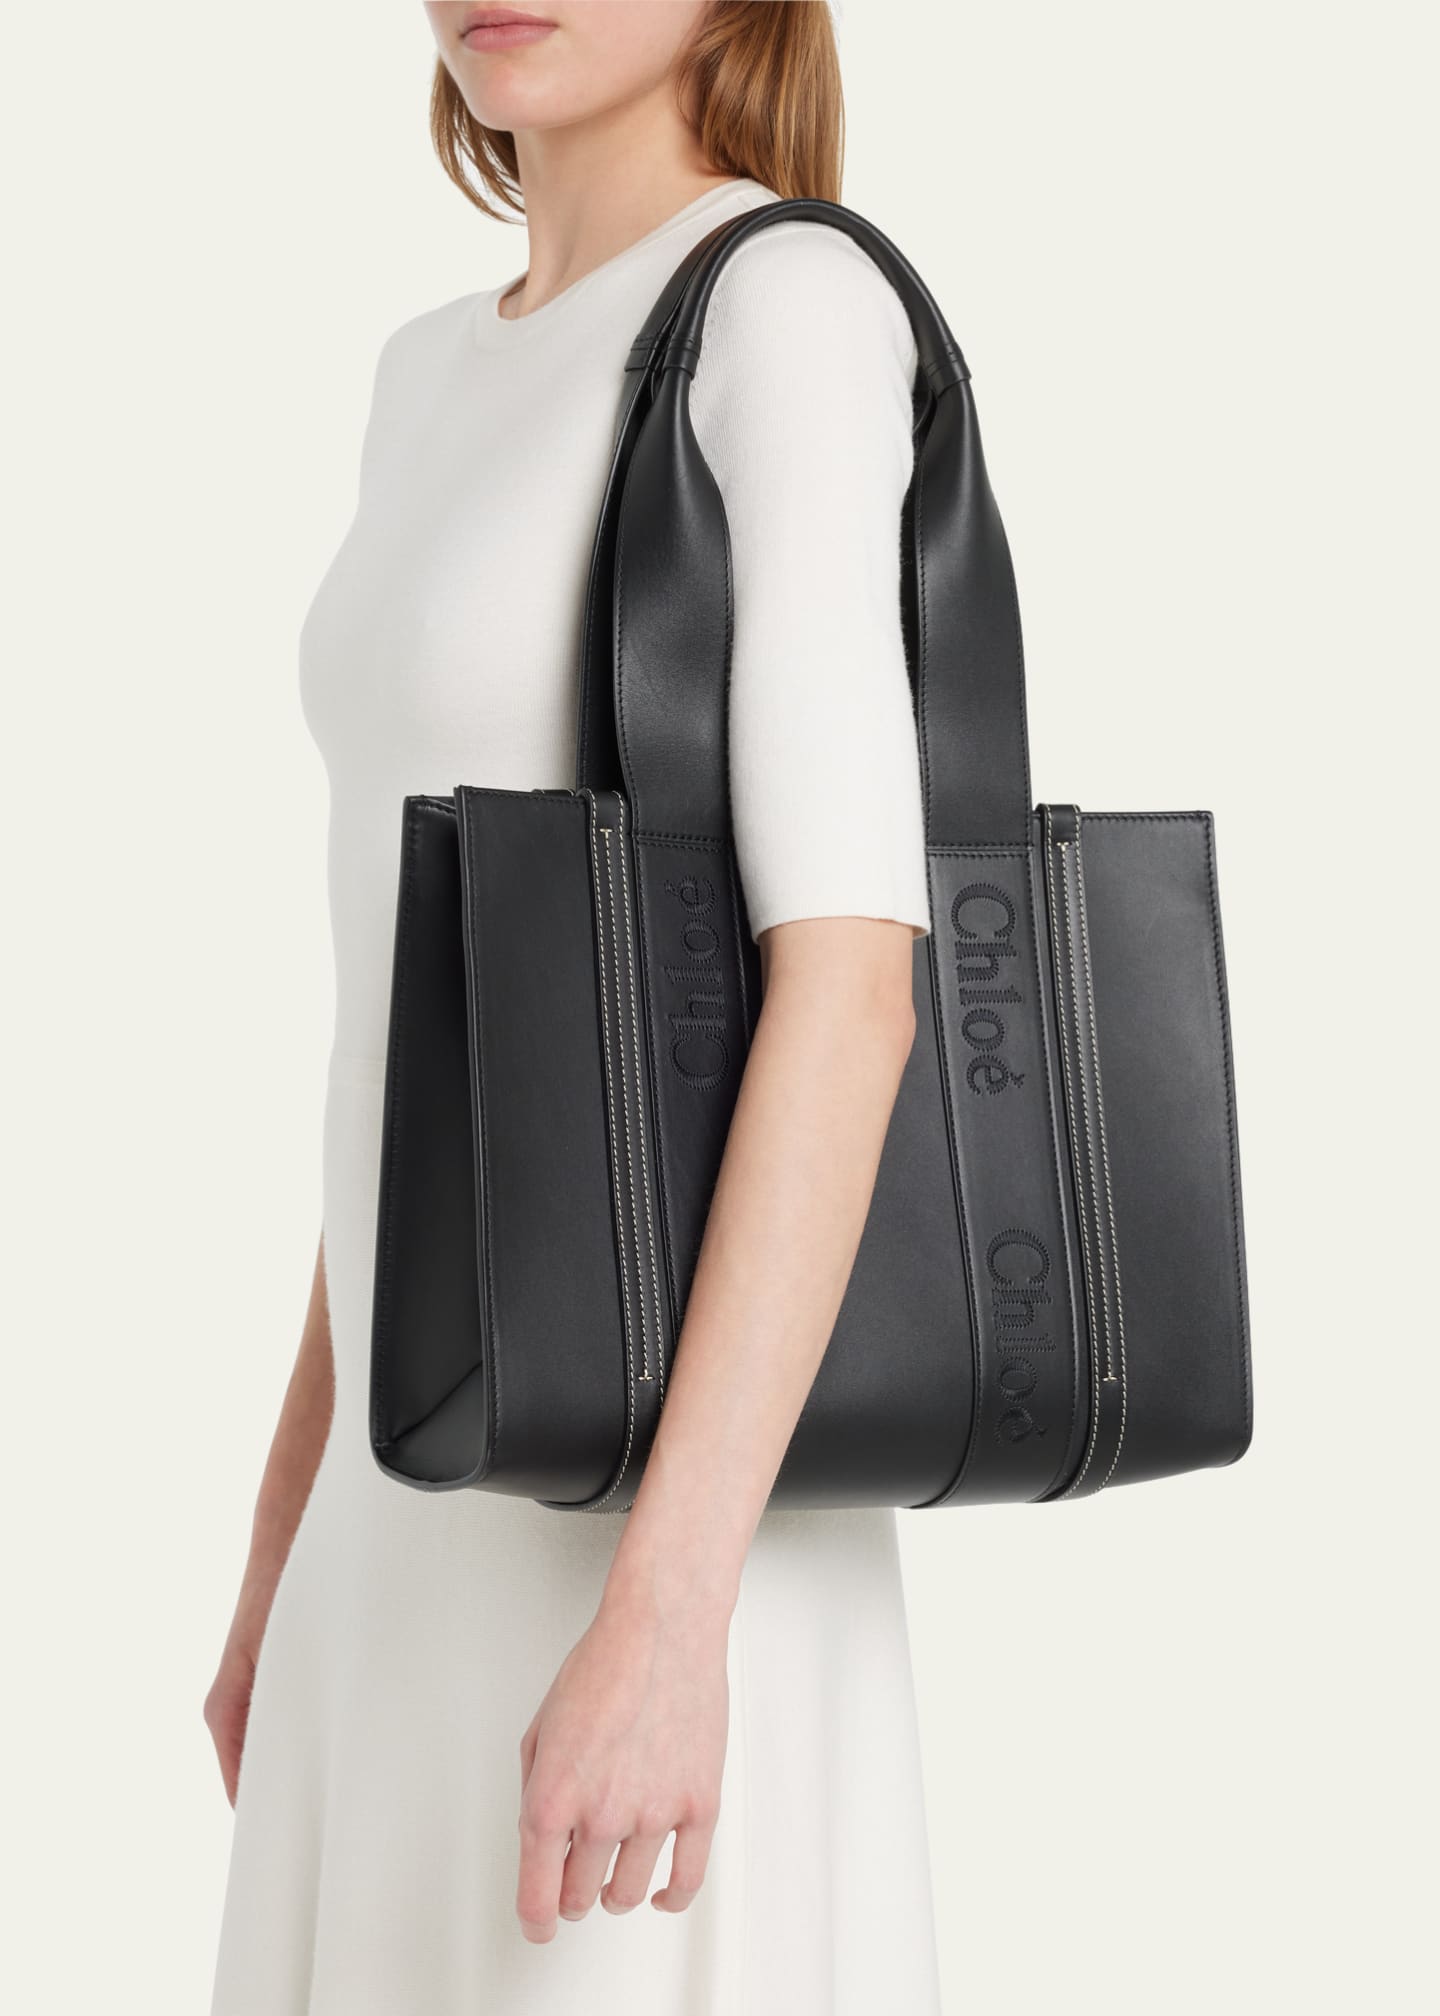 Chloe Woody Medium Tote Bag in Leather - Bergdorf Goodman